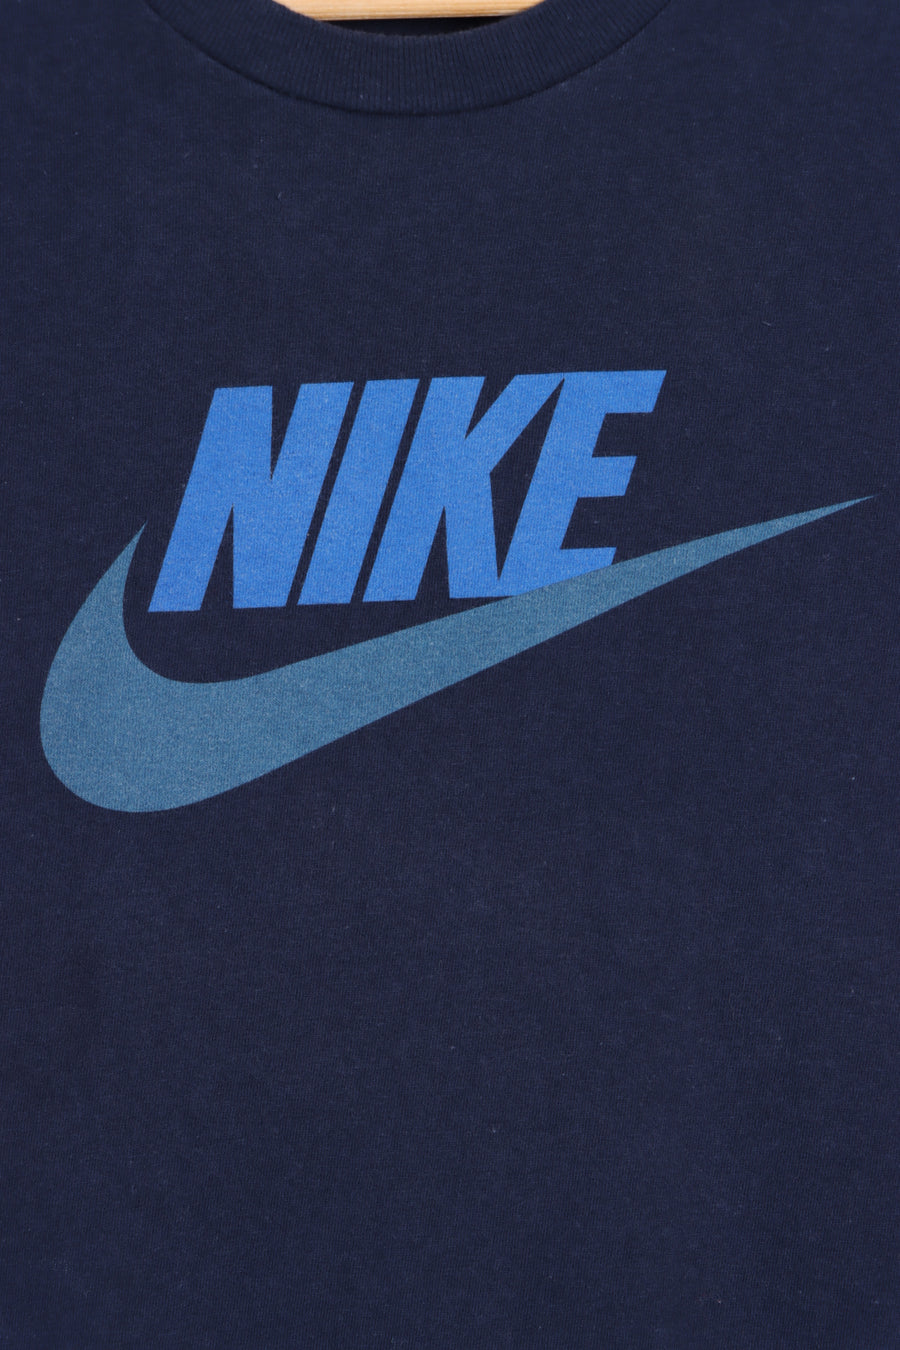 NIKE Blue Toned Swoosh Logo T-Shirt (M)